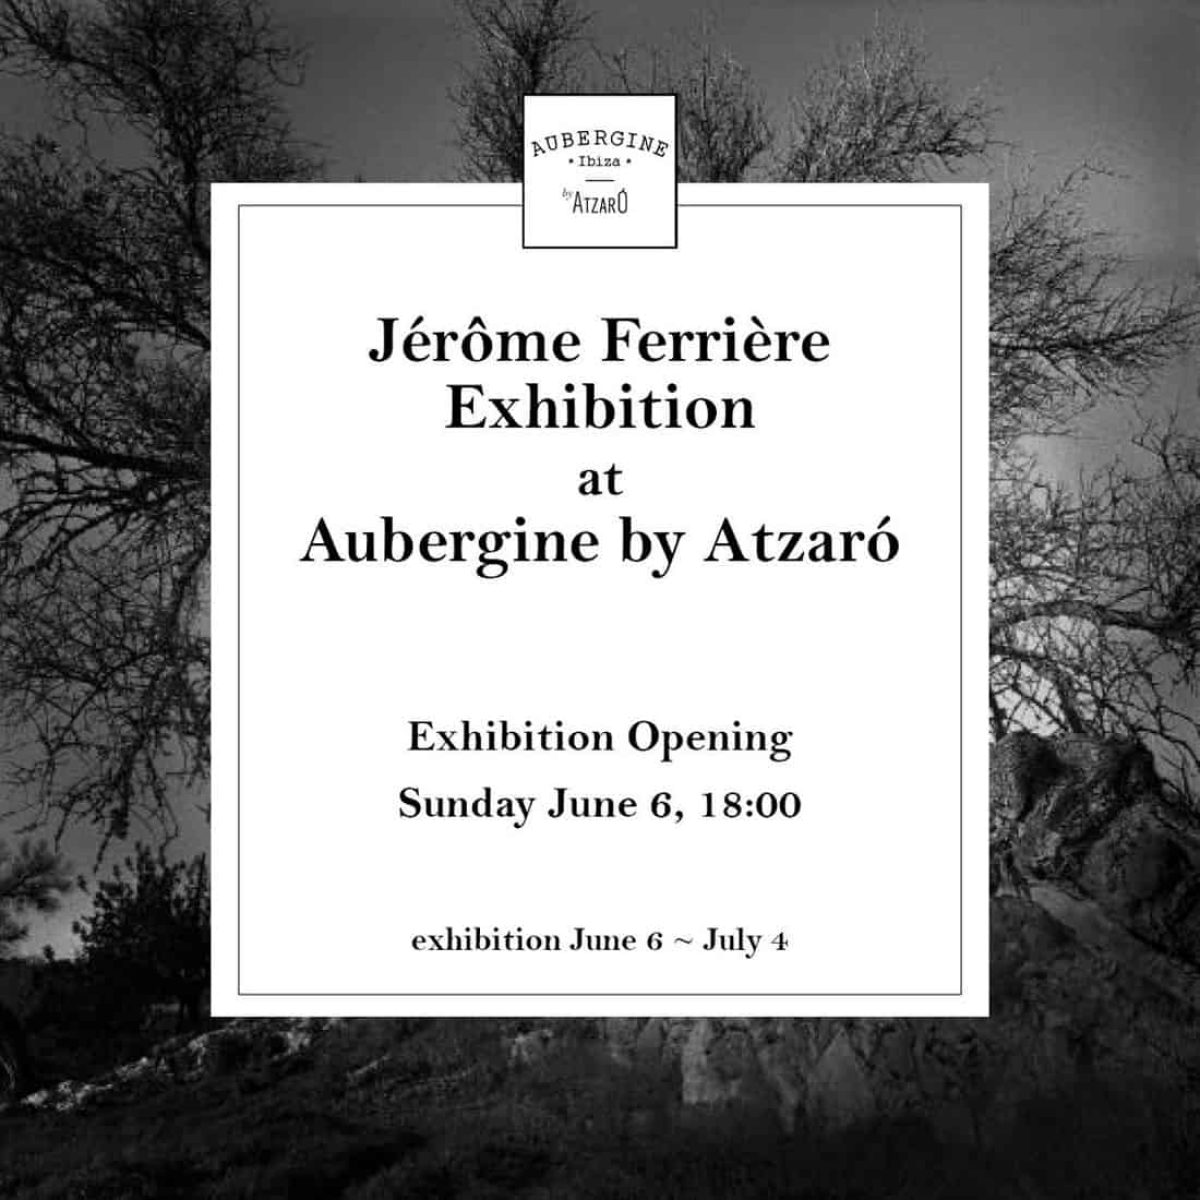 tentoonstelling-jerome-ferriere-restaurant-aubergine-ibiza-2021-welcometoibiza